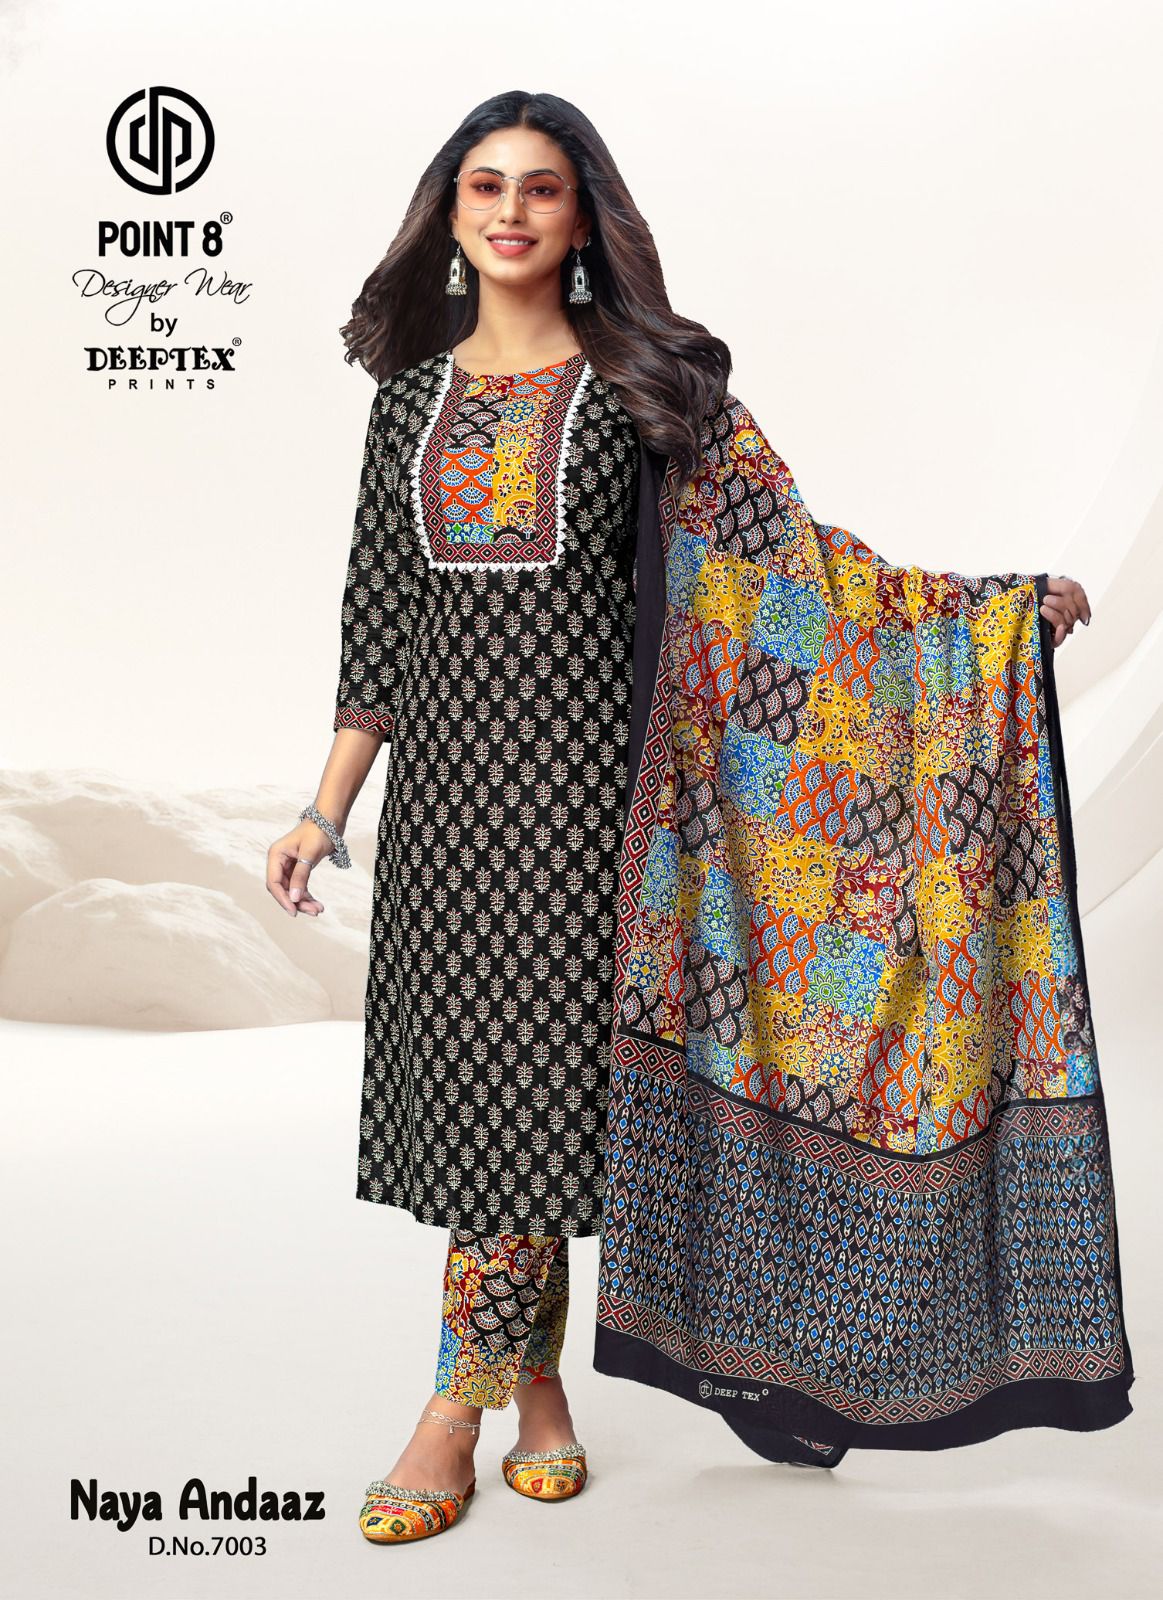 Deeptex Point 8 Naya Andaaz Vol 7 Readymade Dress Catalog collection 7